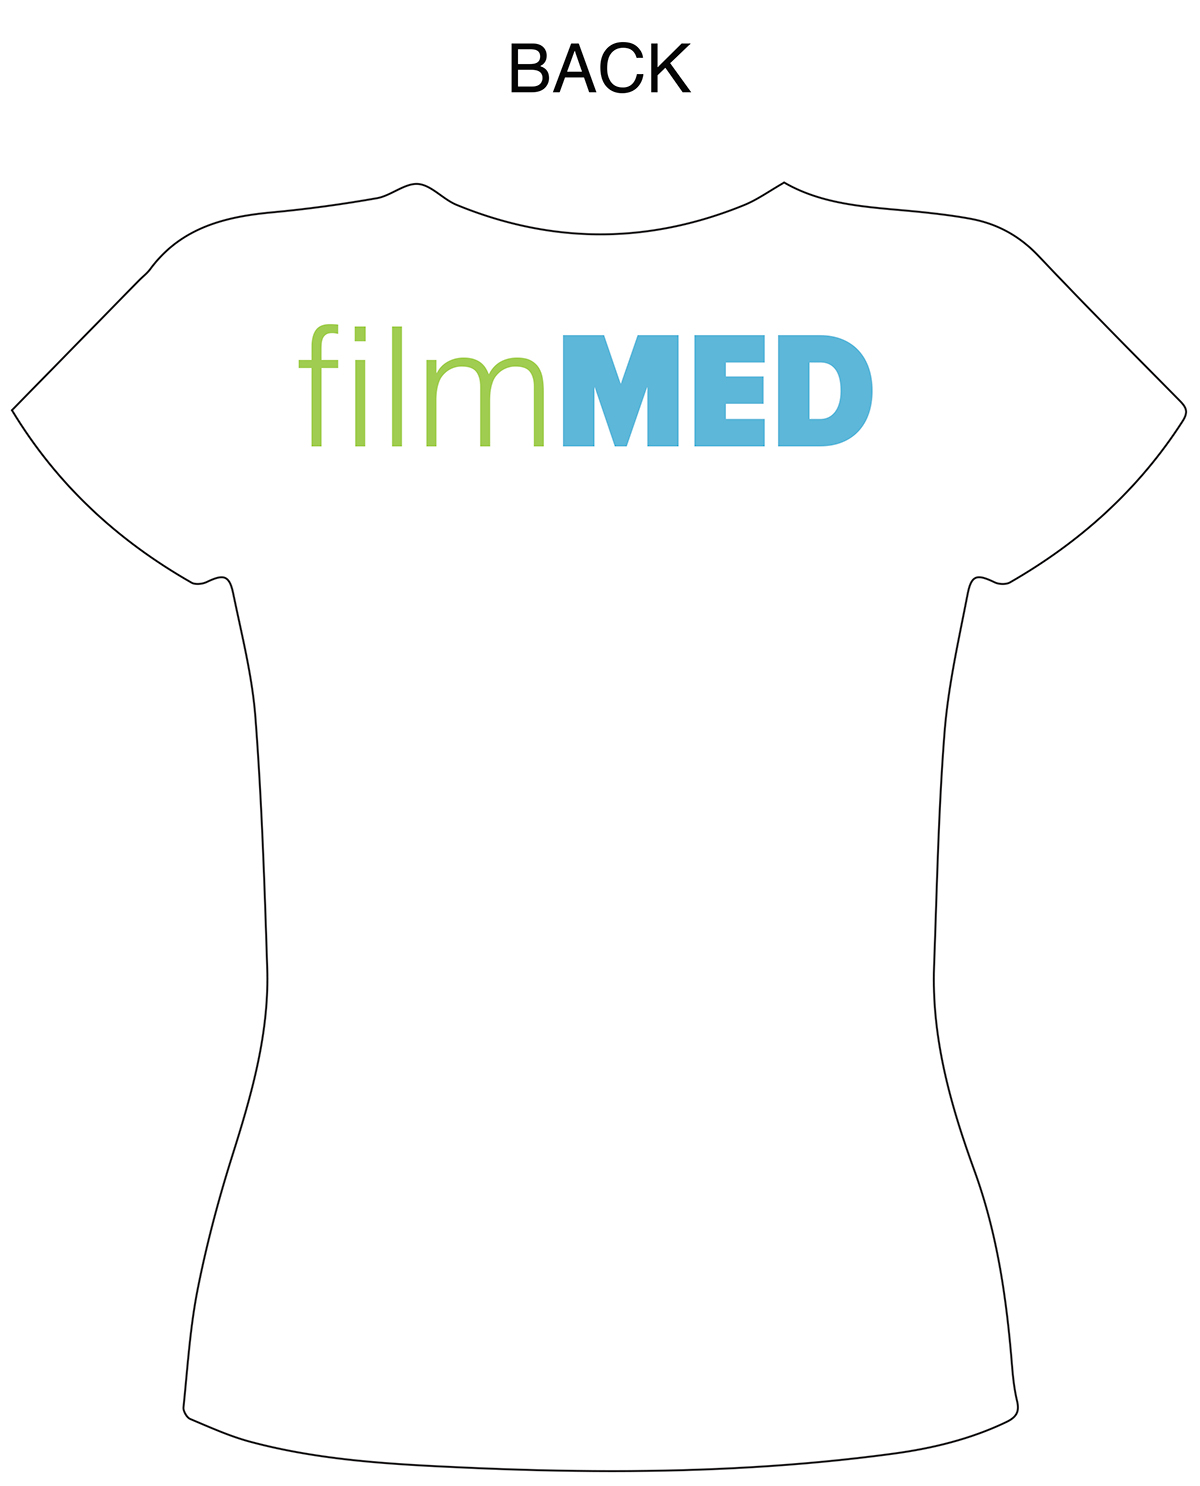 filmMED shirt design